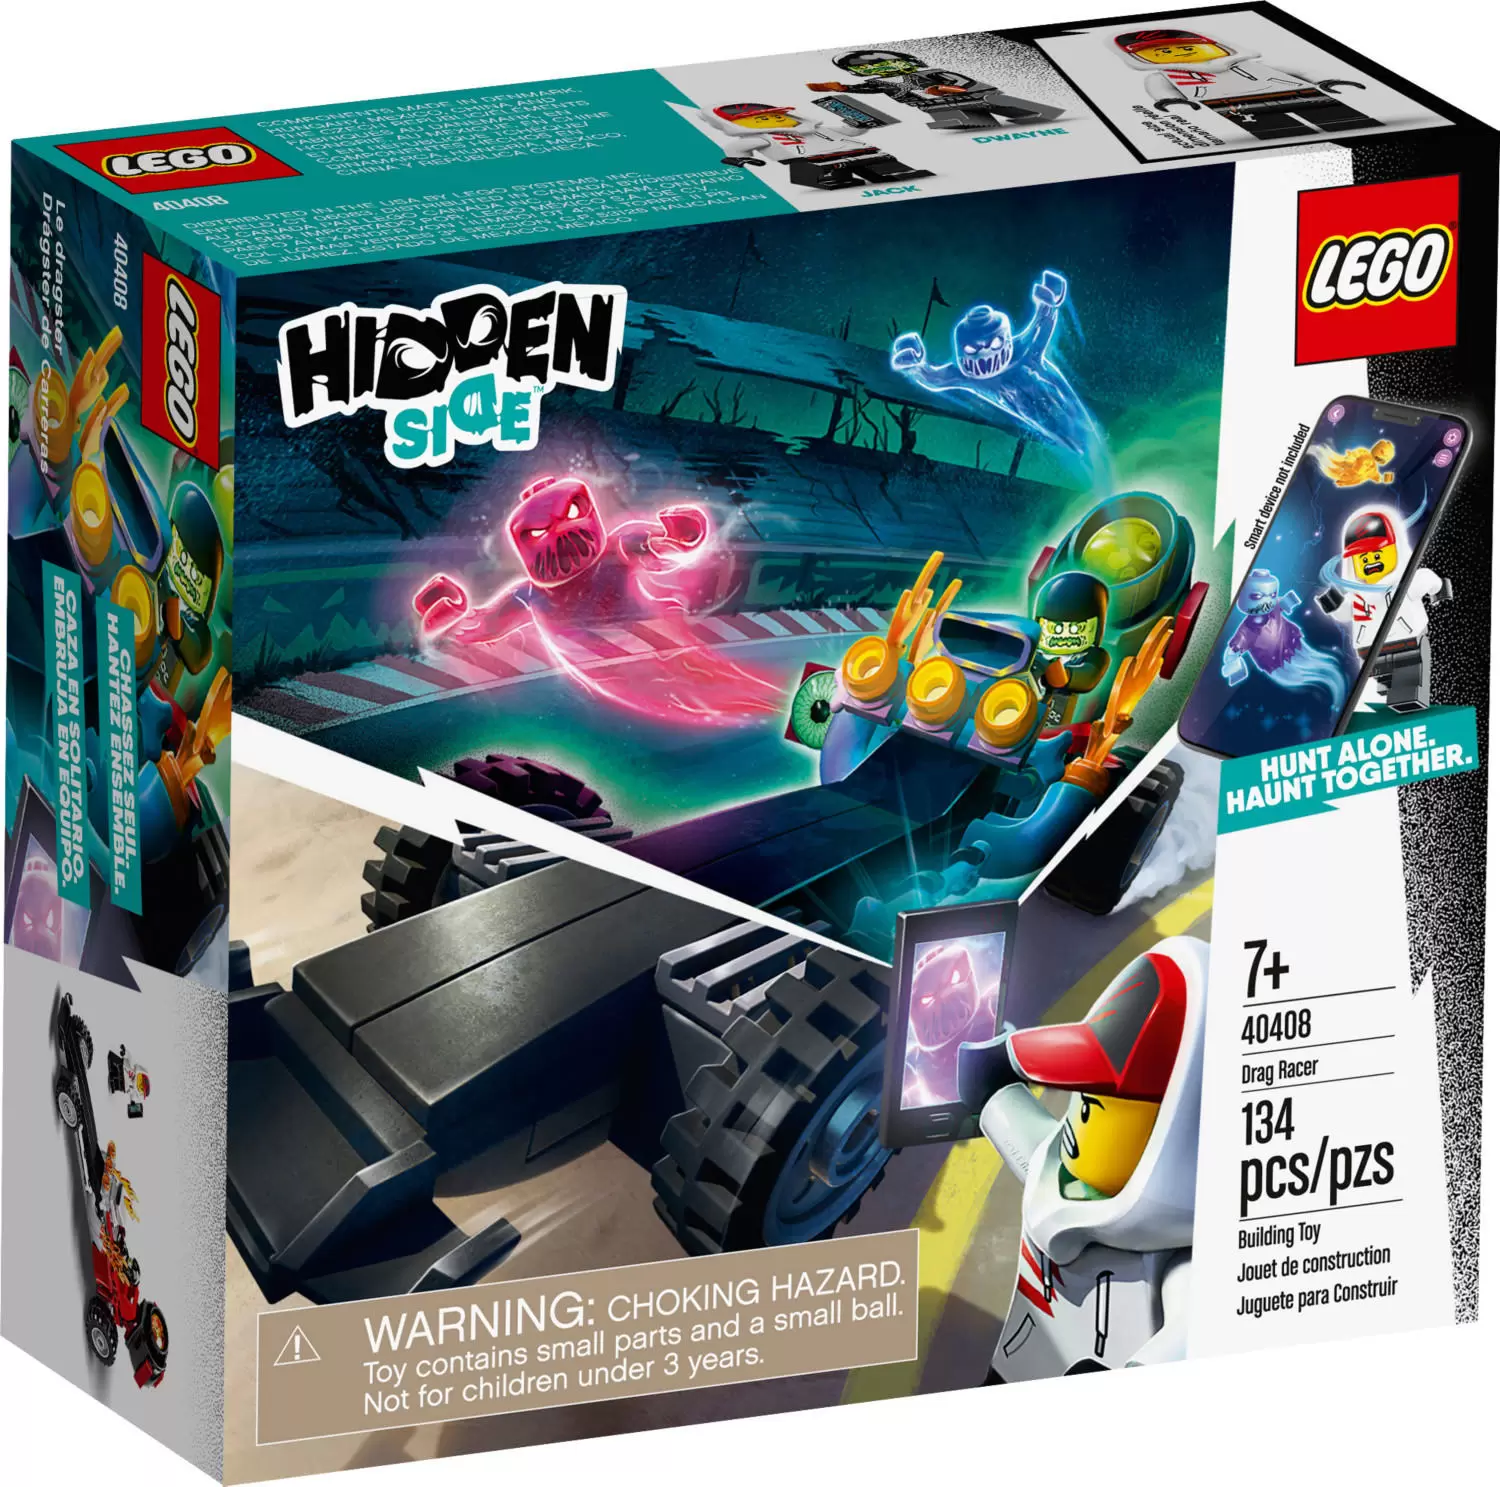 LEGO Hidden Side - Drag Racer